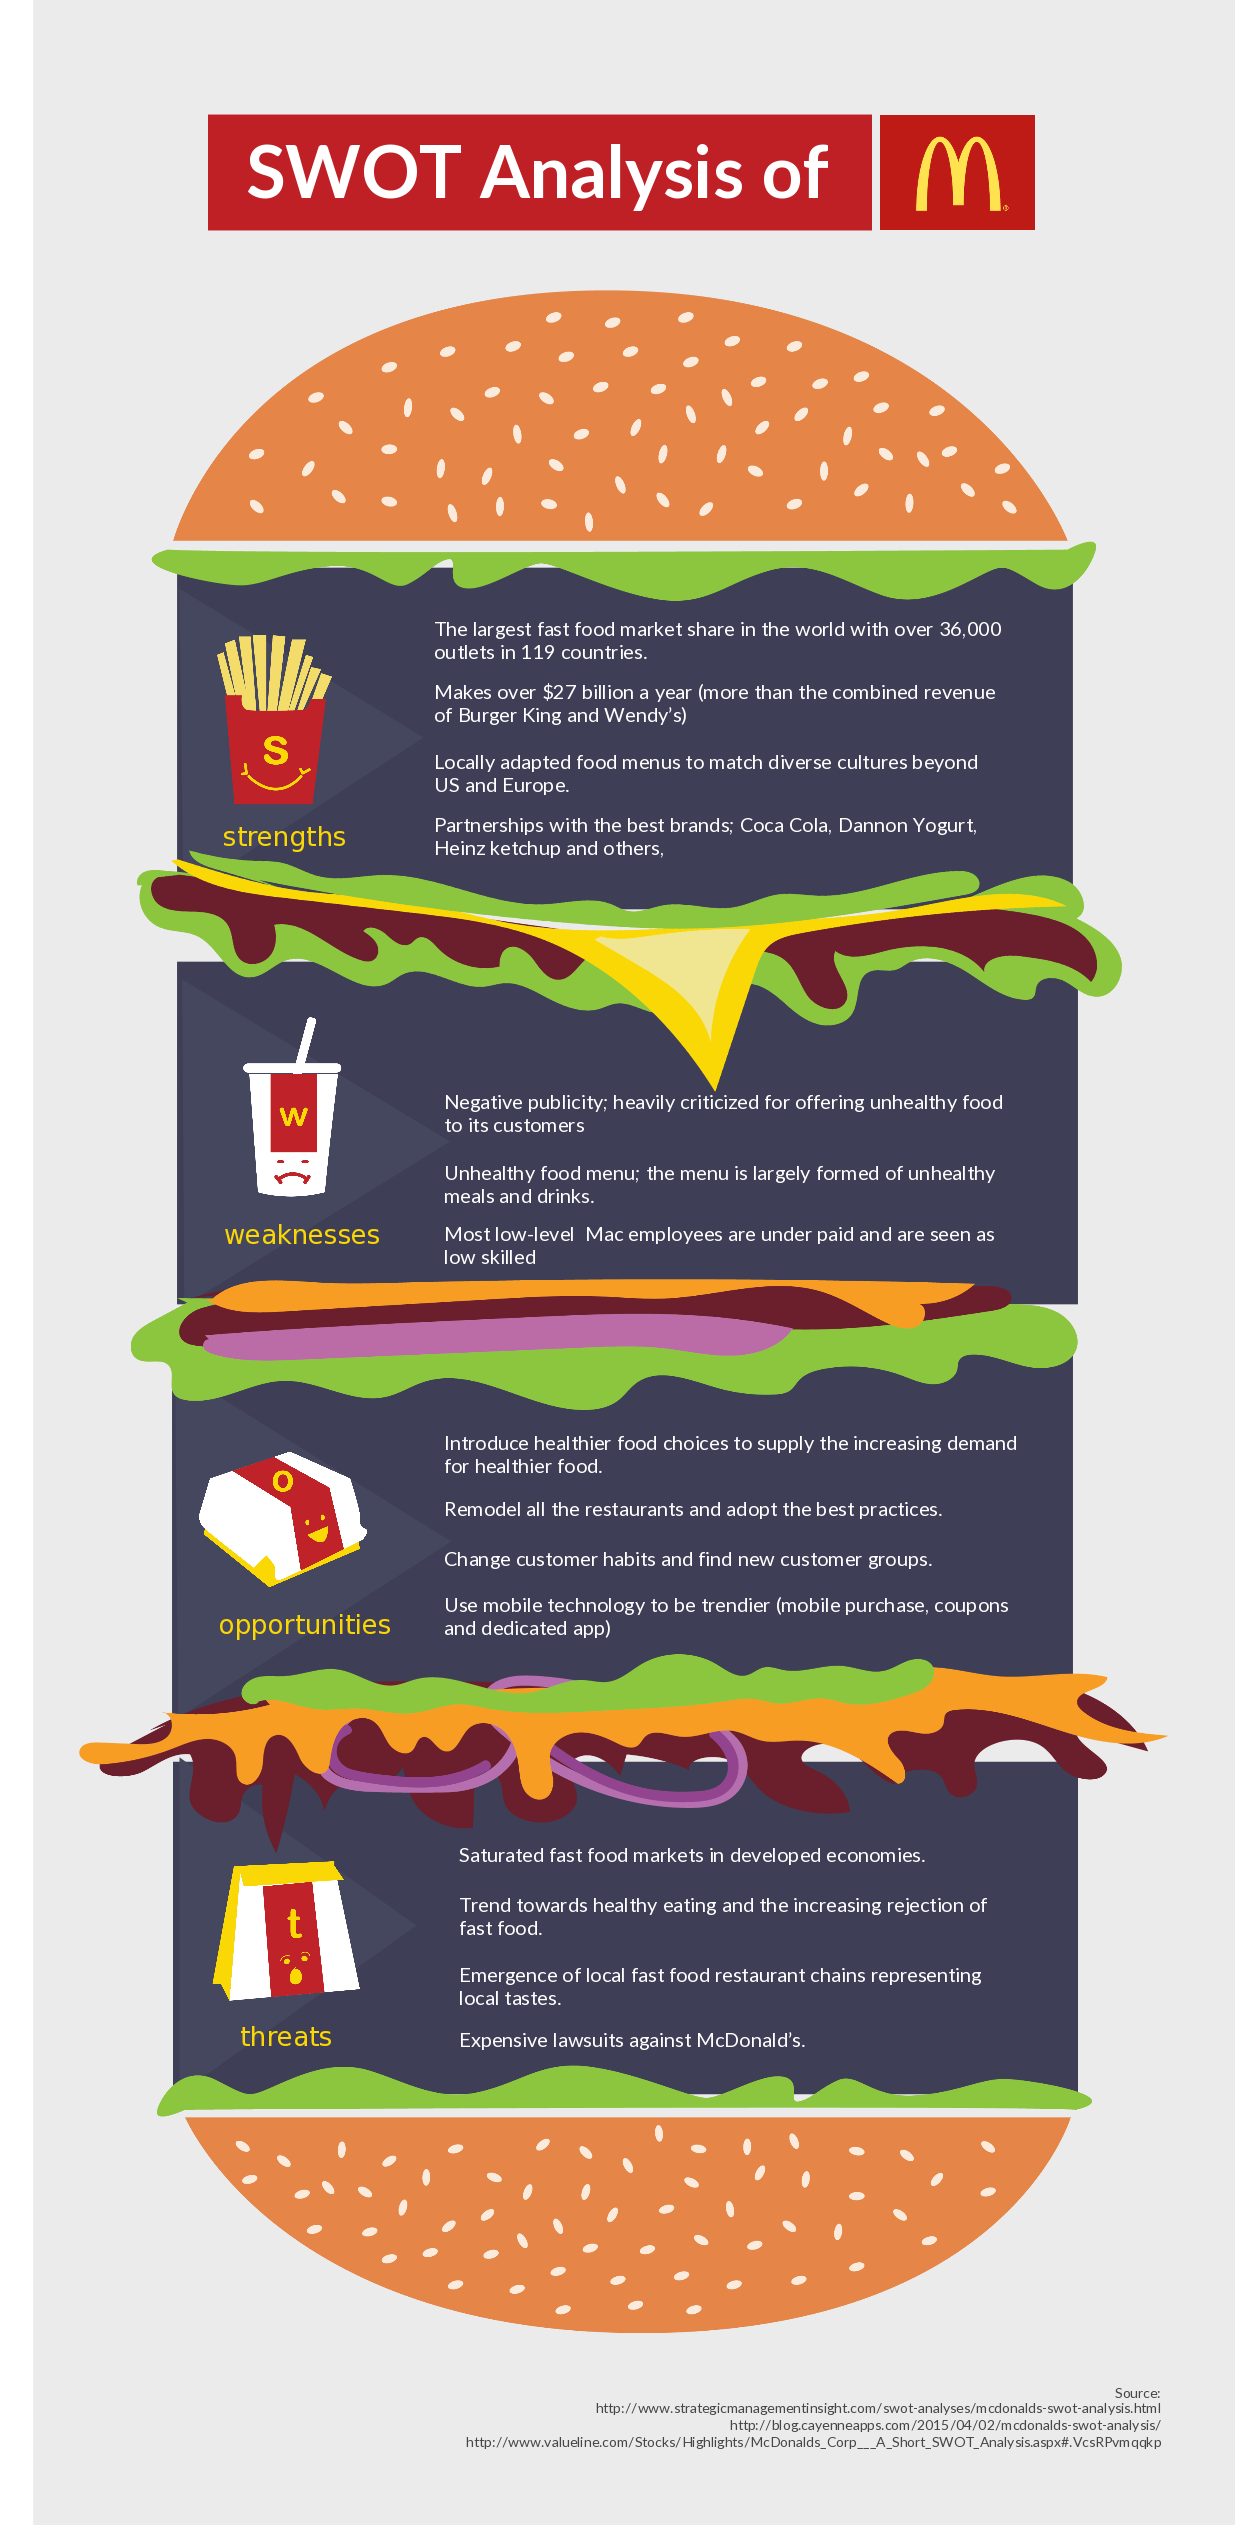 SWOT Analysis of McDonalds